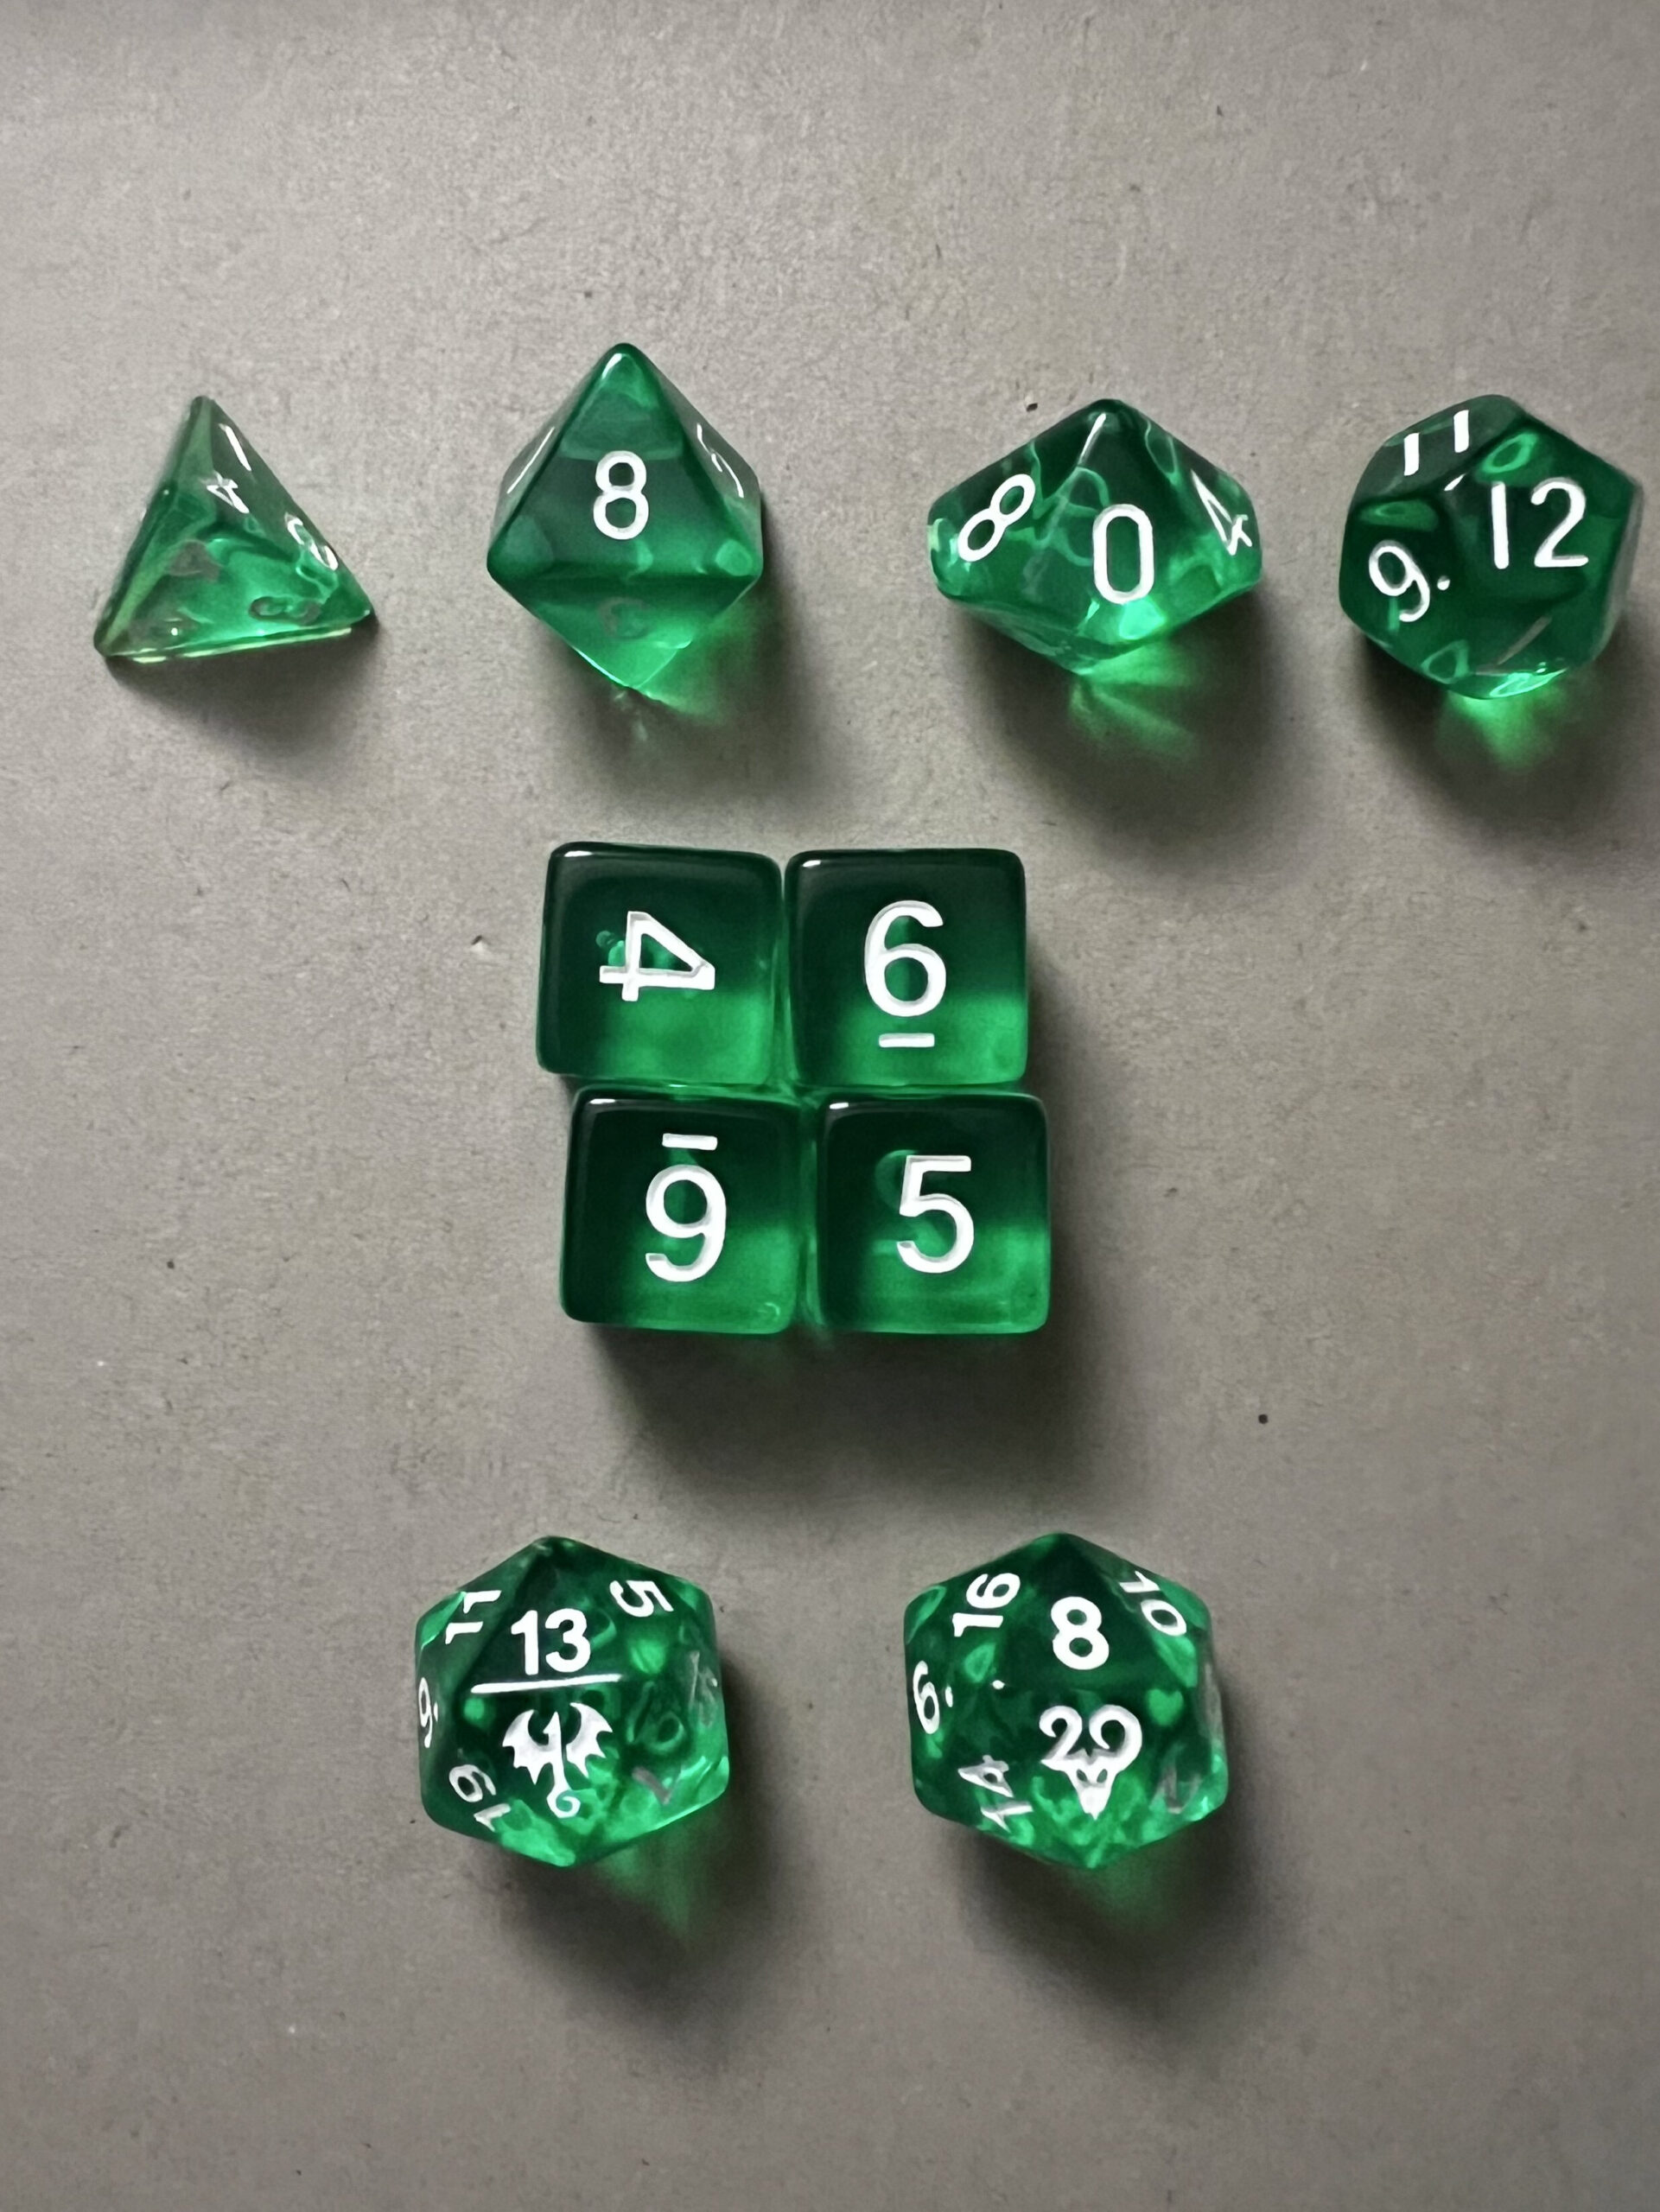 Image of Dragonbane dice